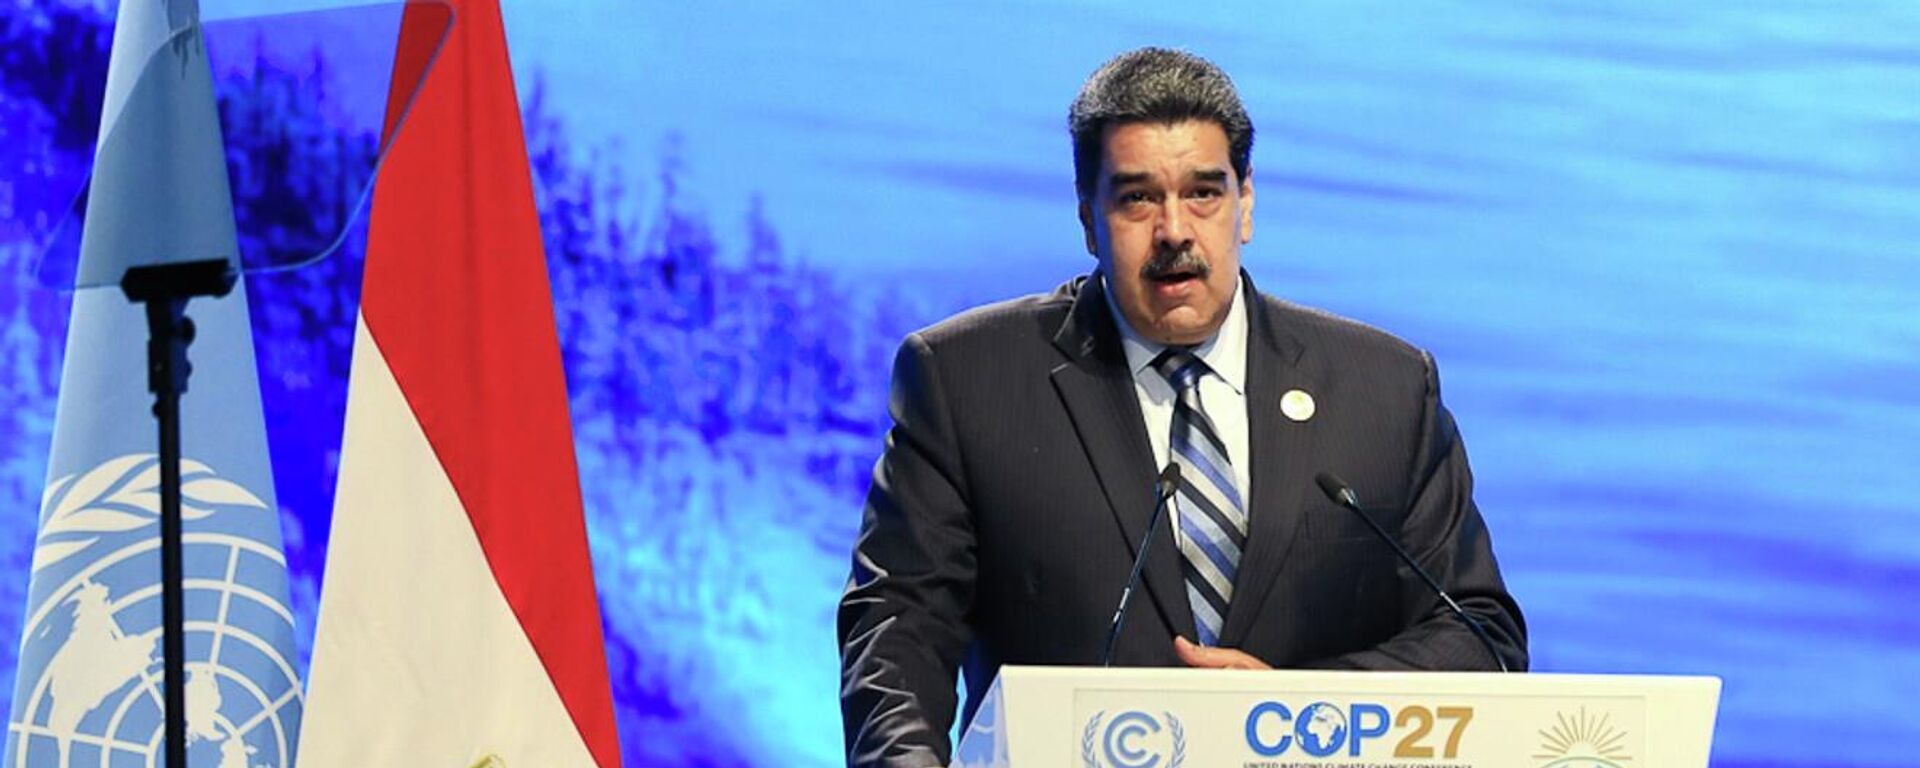 O presidente da Venezuela, Nicolás Maduro, discursa durante a COP27 - Sputnik Brasil, 1920, 08.11.2022